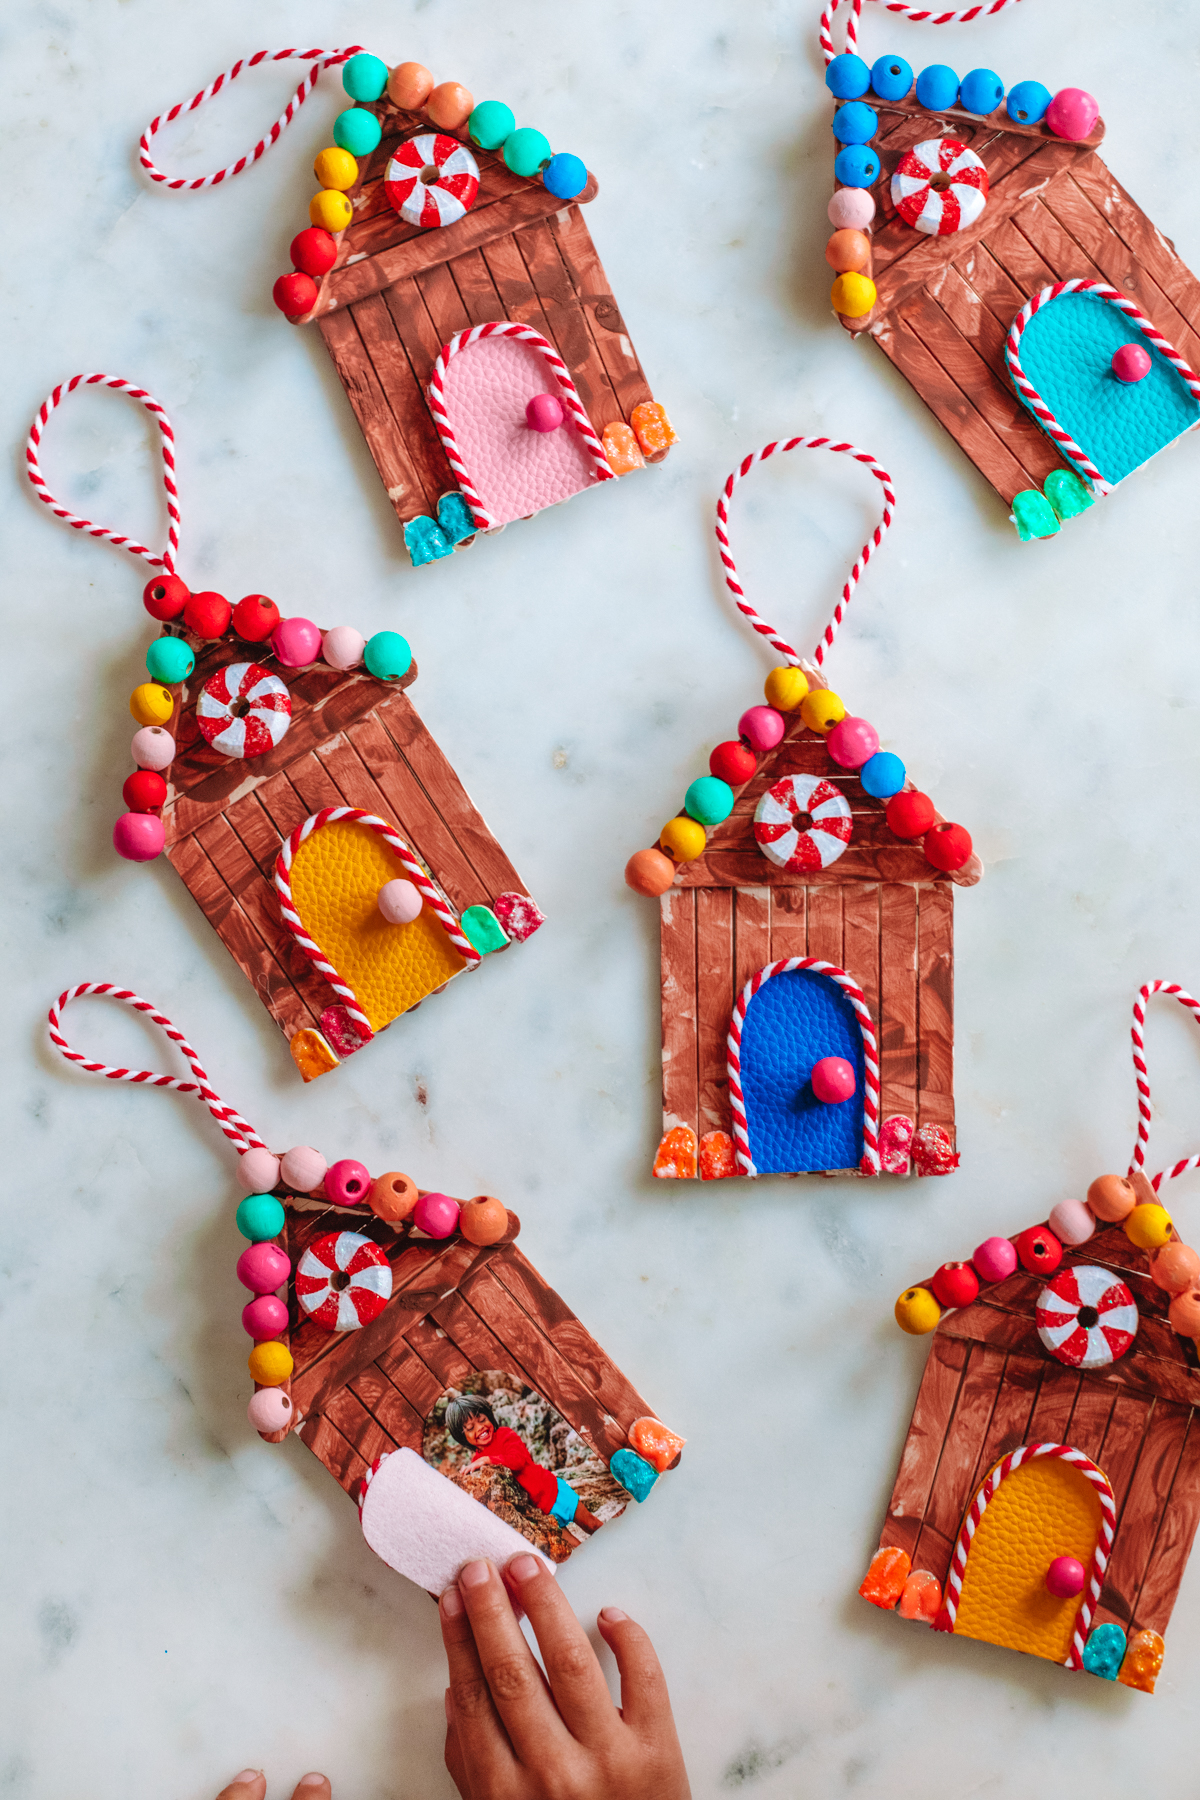 DIY Popsicle Stick Gingerbread House Ornaments | Studio DIY | Bloglovin’